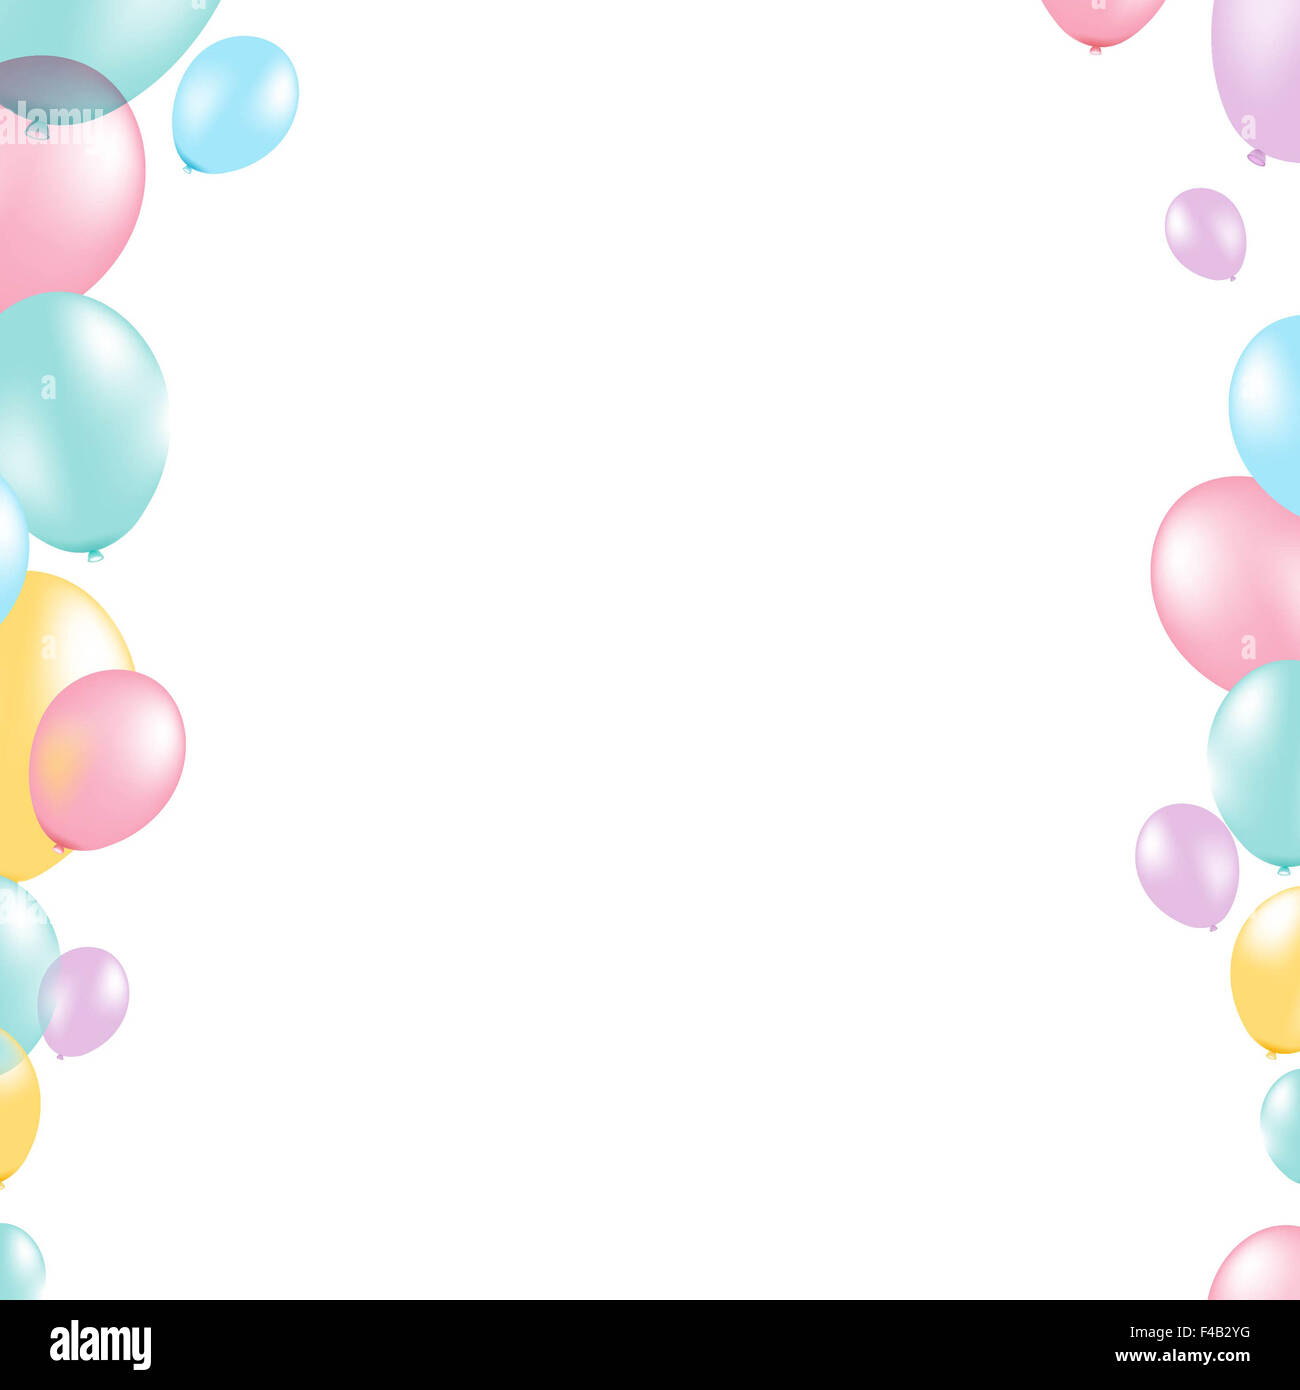 Pastel Balloon Border Stock Photo - Alamy